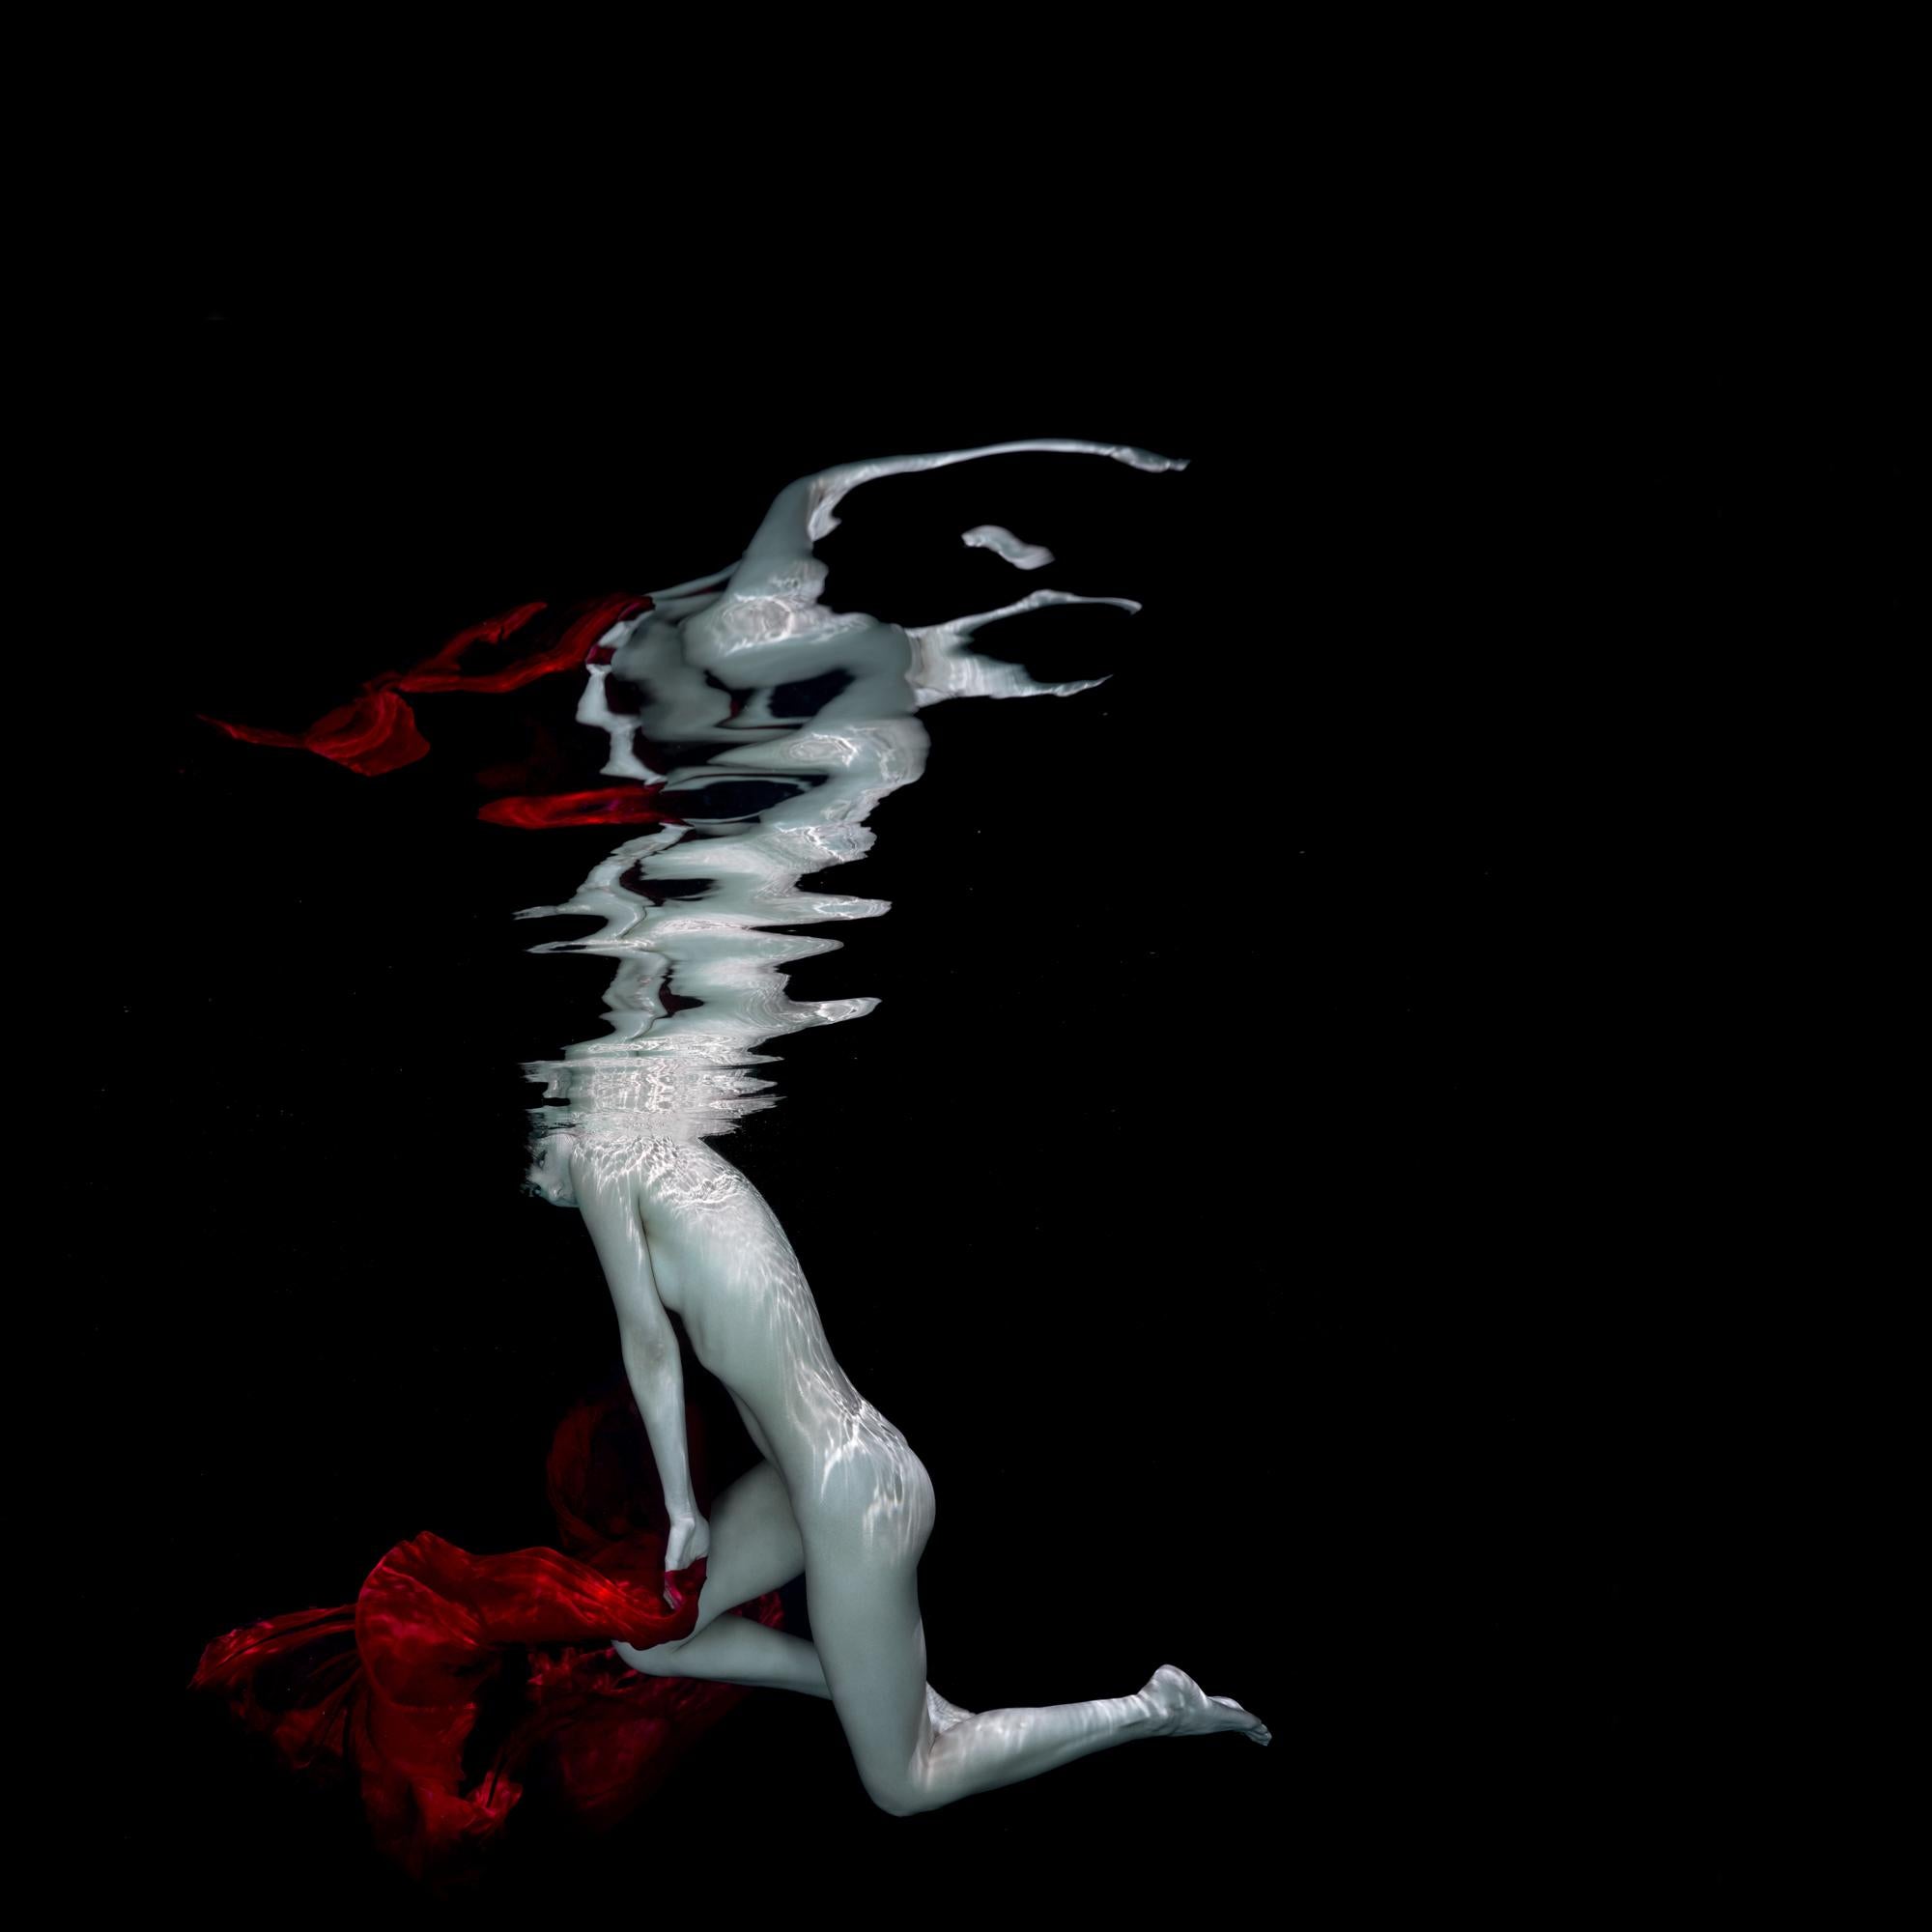 Alex Sher Figurative Photograph - Carmen - underwater nude photograph - print on paper